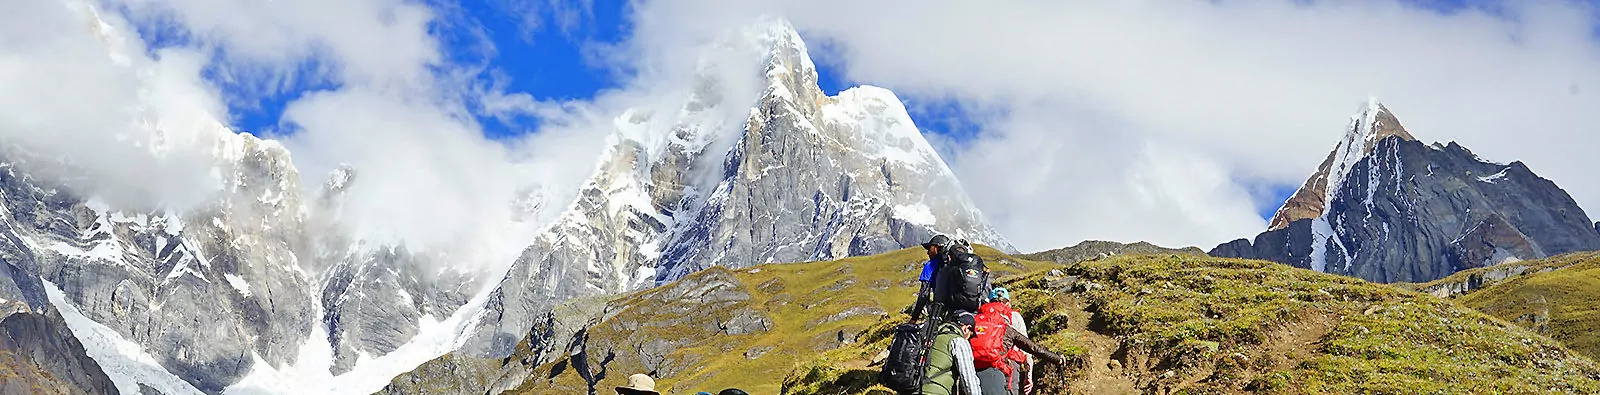 Hikers with the glaciated Cordillera Huayhuash behind, Peru